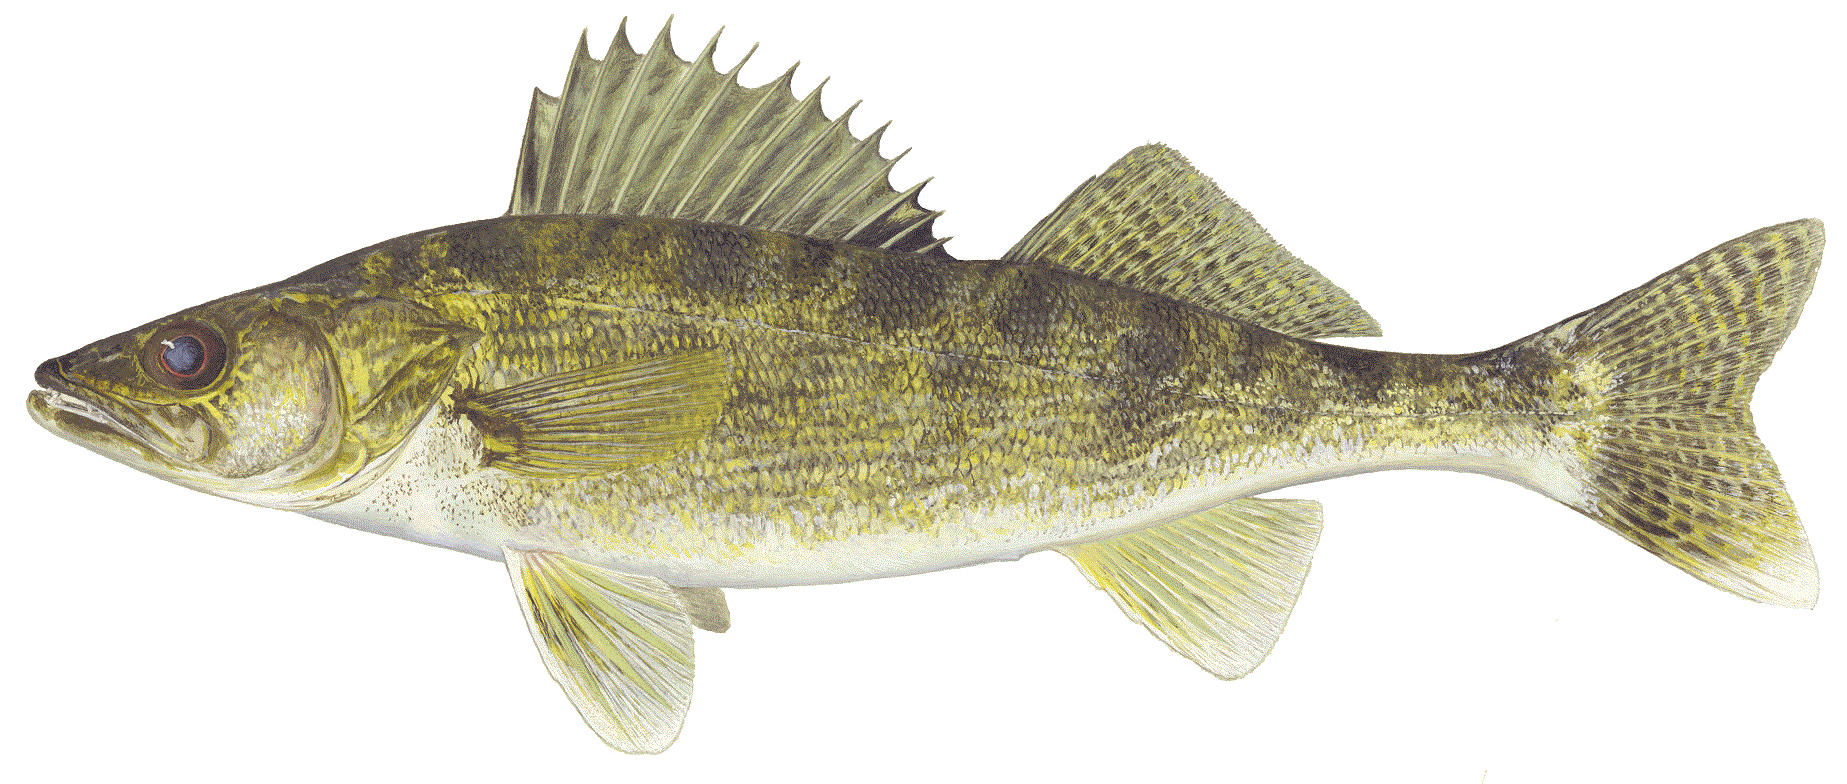 Walleye, illustration by Maynard Reece, from Iowa Fish and Fishing.